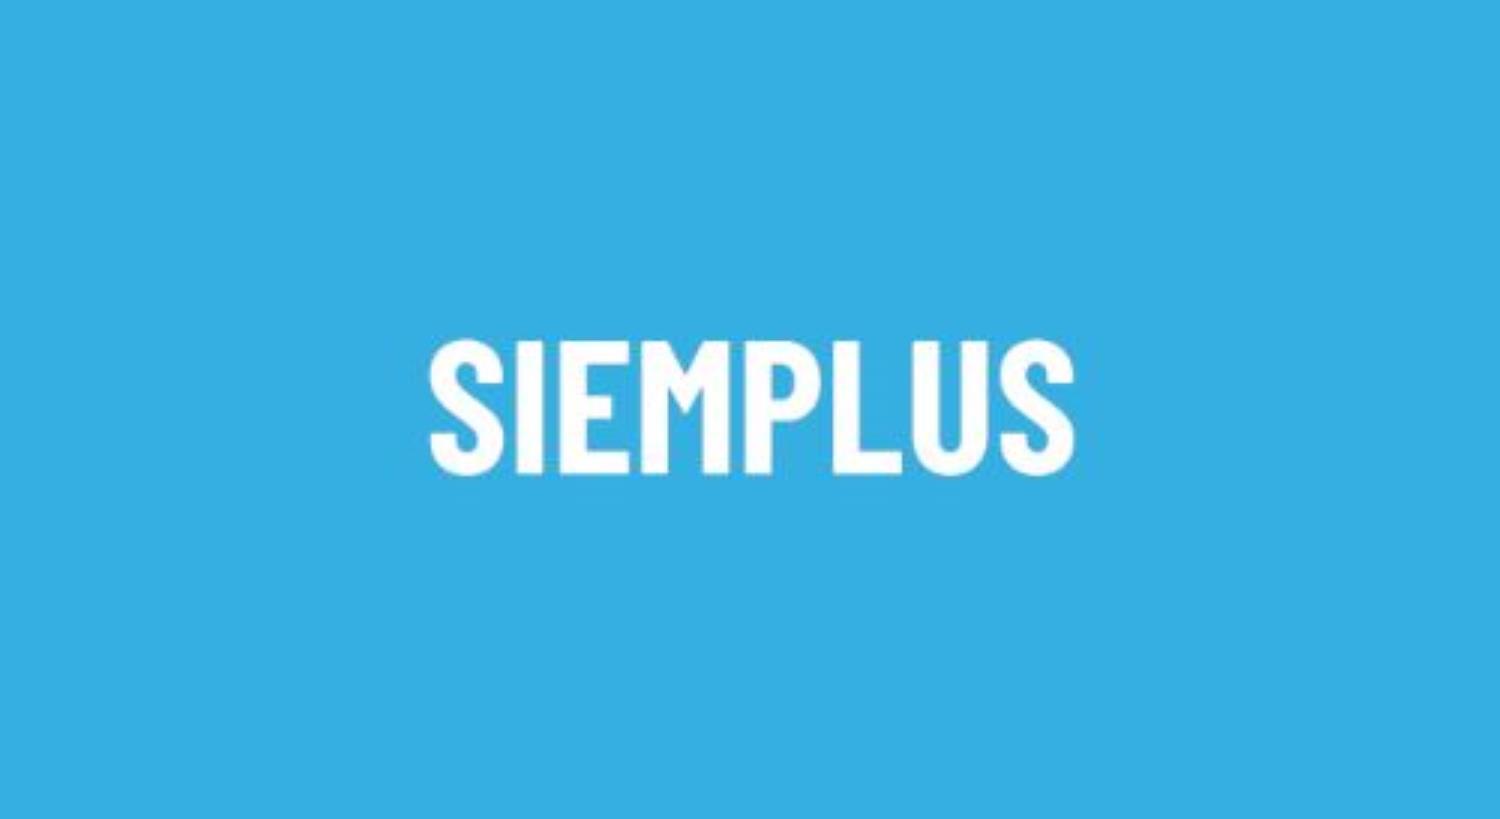 SIEMPLUS Cyber Security Management